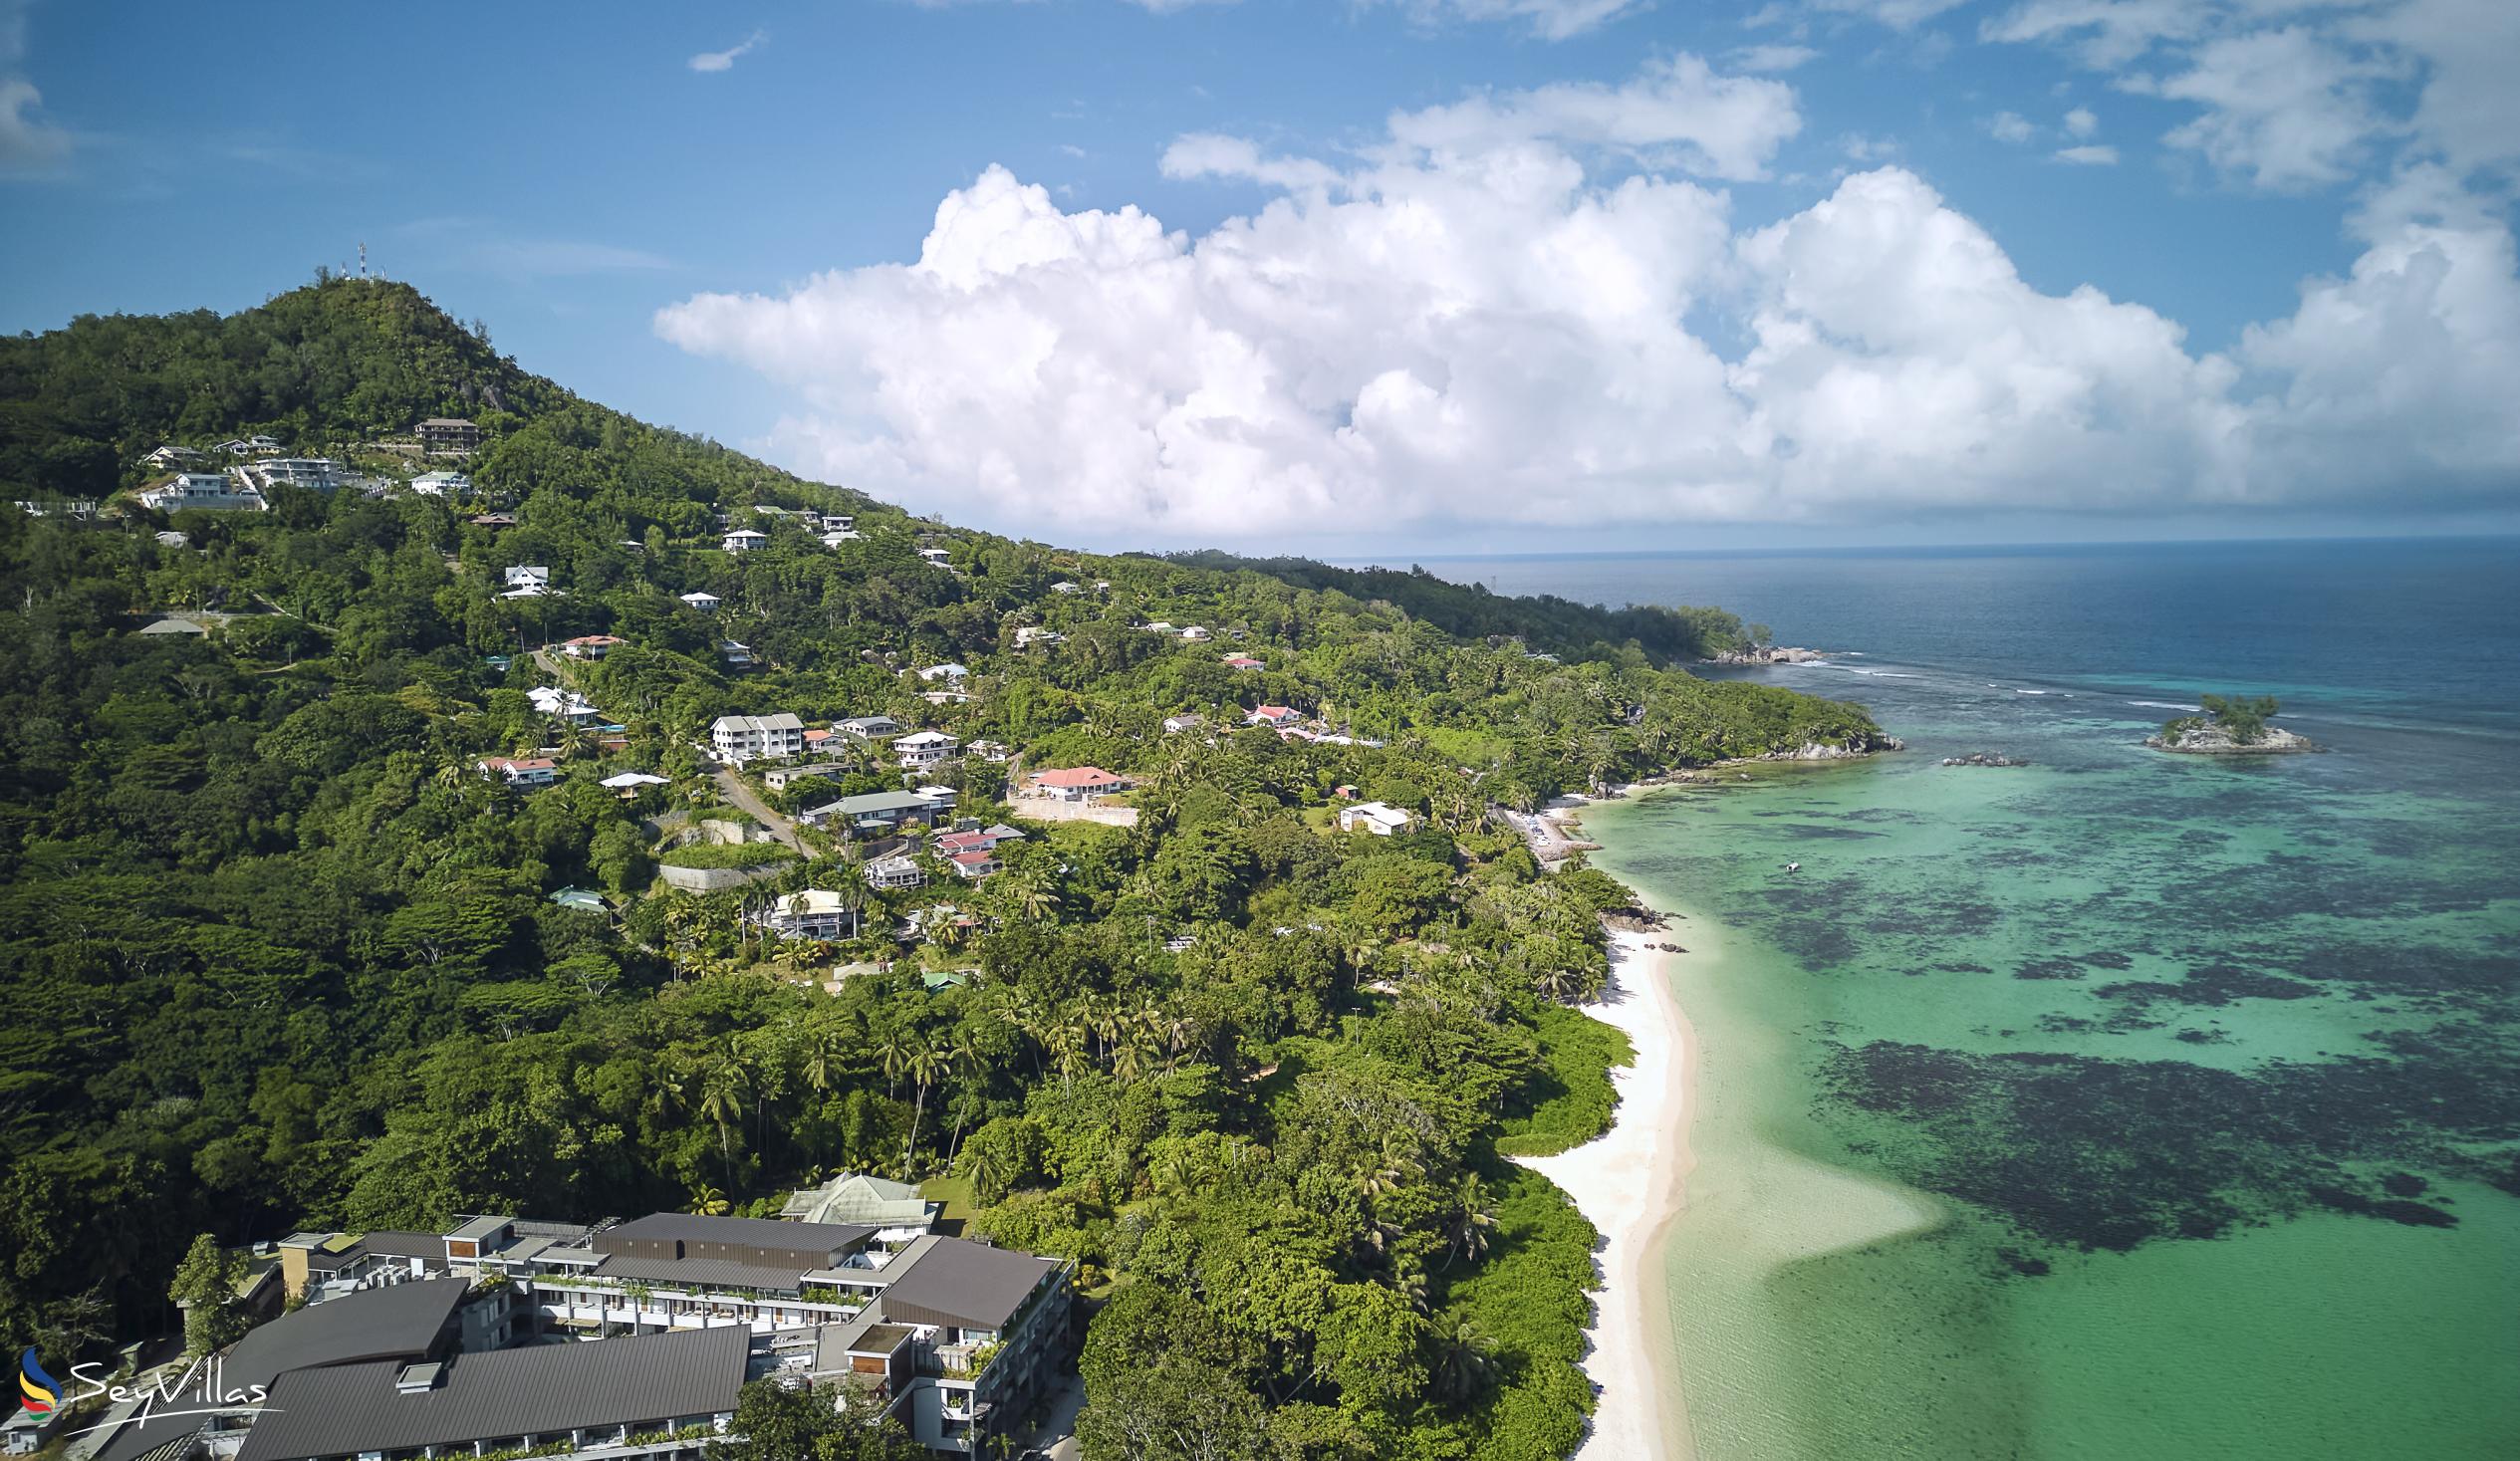 Foto 26: laila Resort - Location - Mahé (Seychelles)